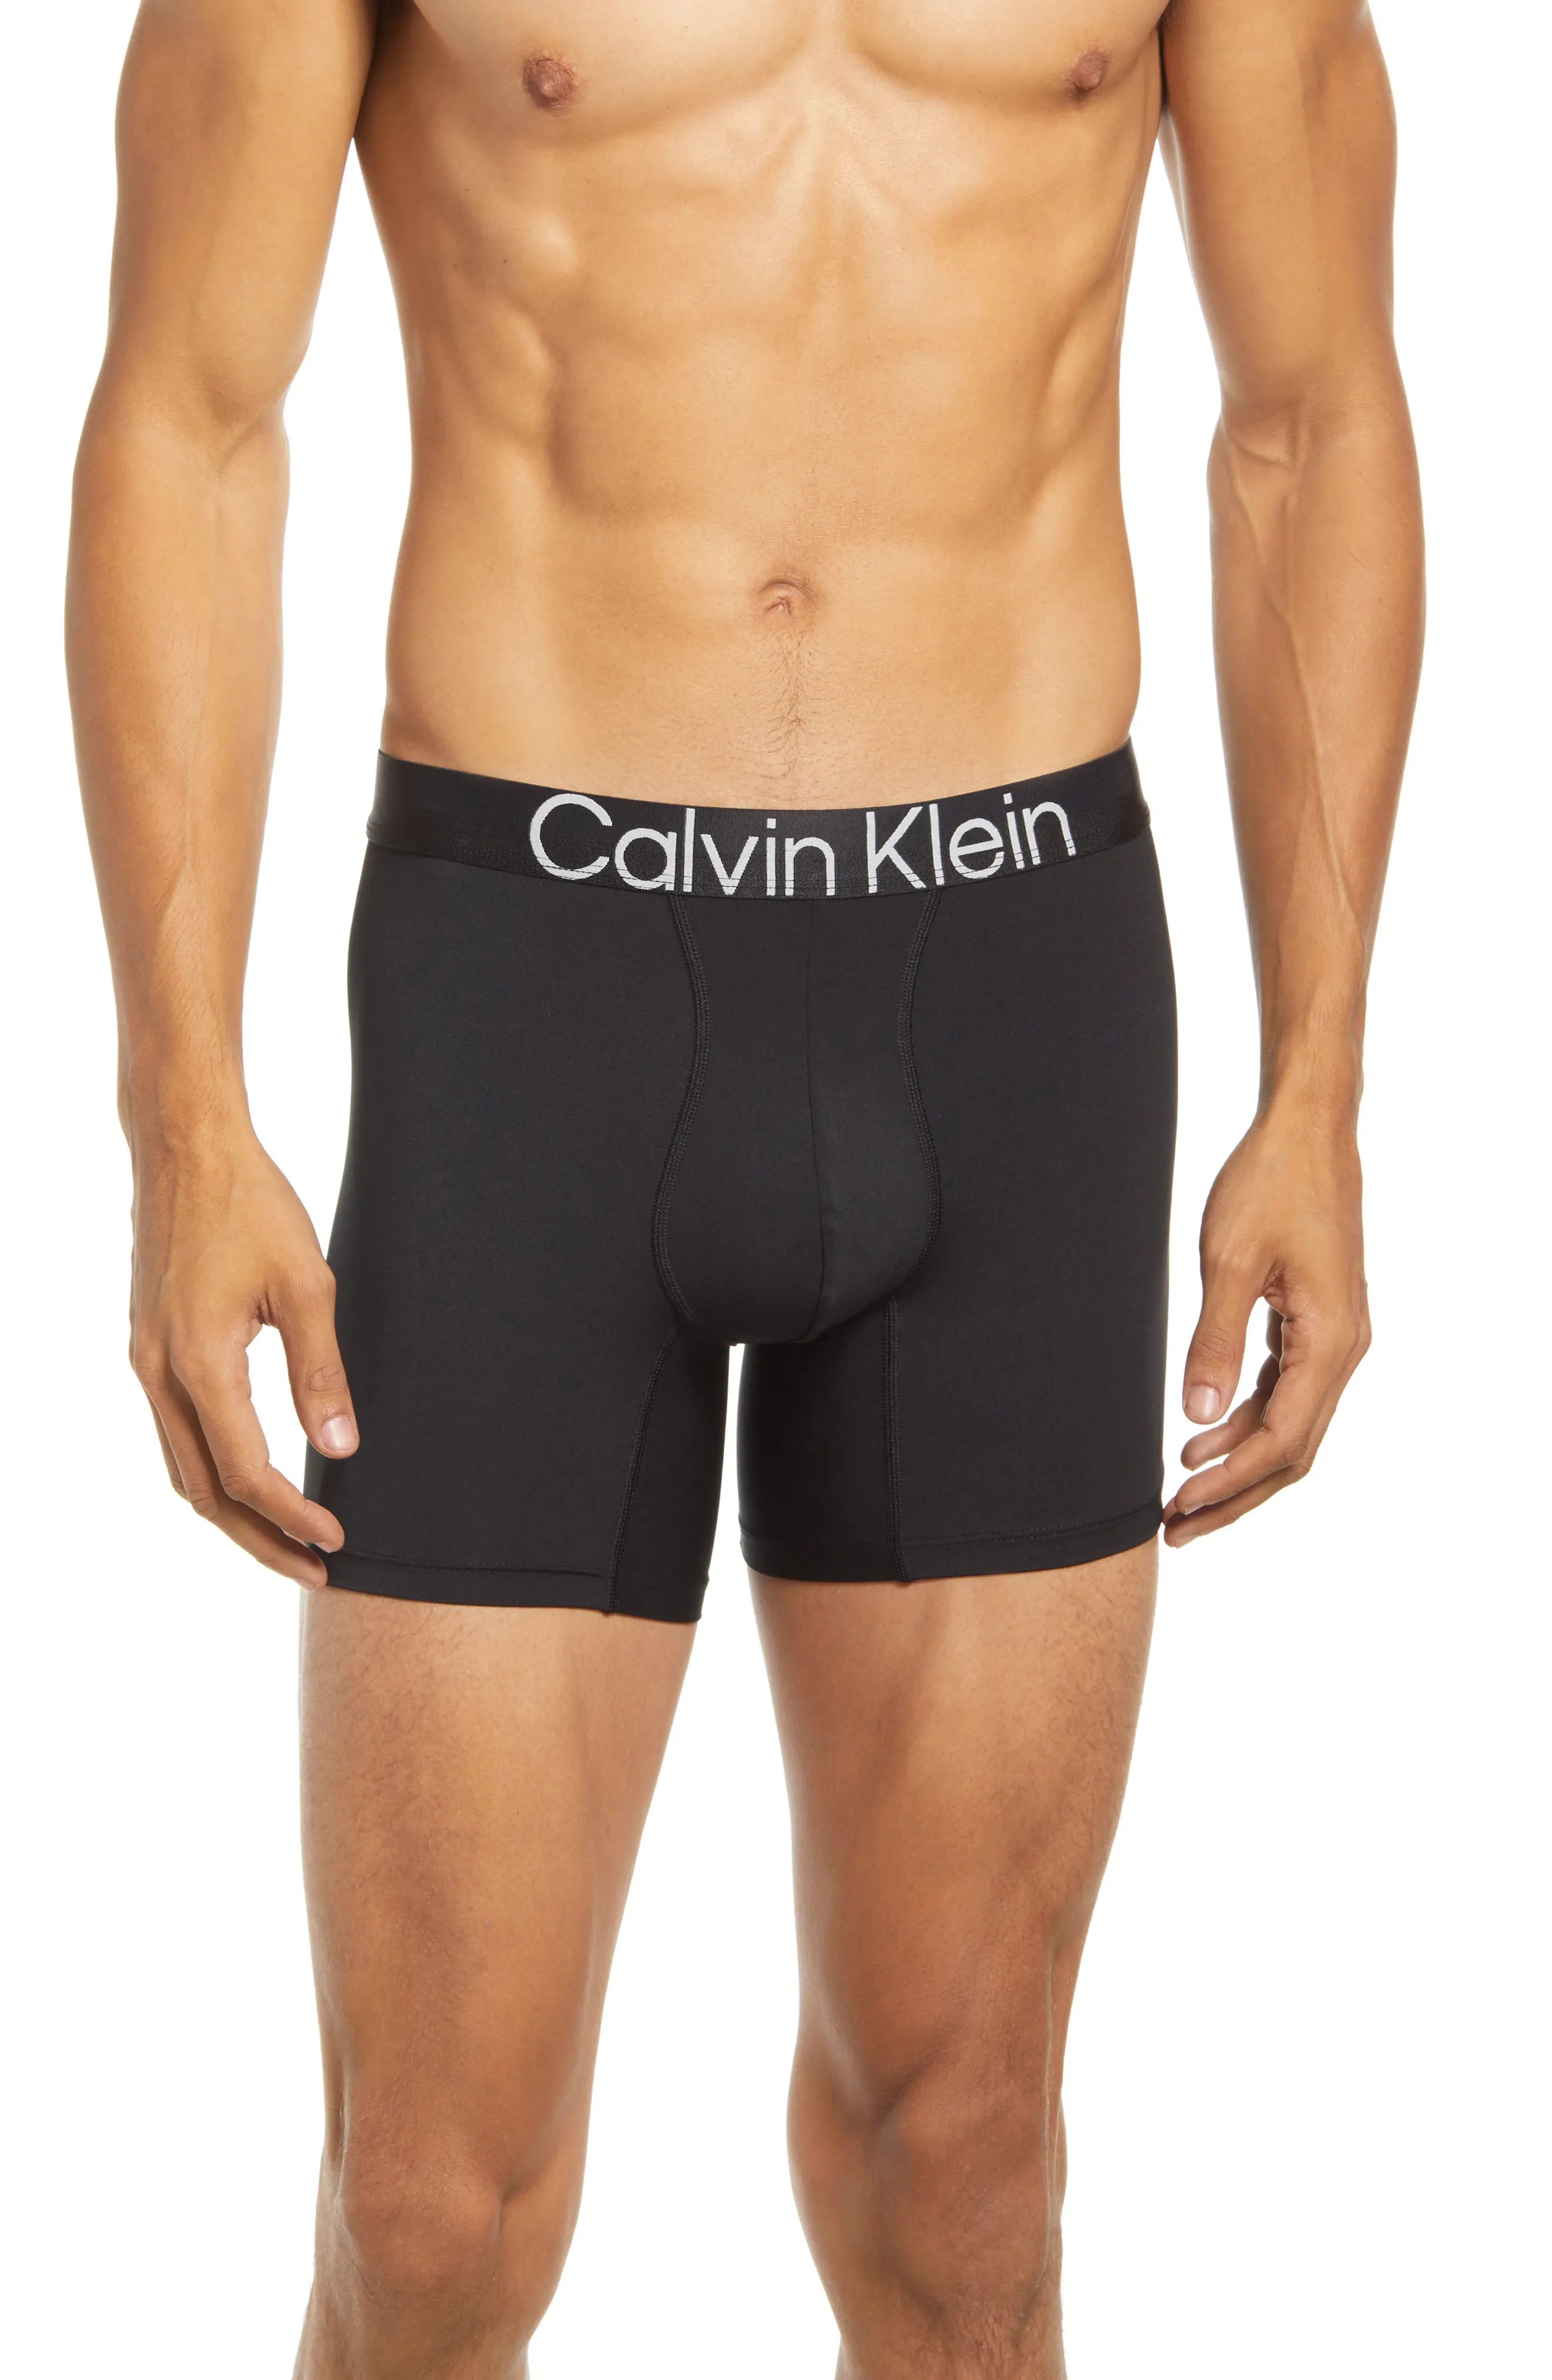 Calvin Klein Boxer Briefs, Size Large in Ub1 Black at Nordstrom | Nordstrom